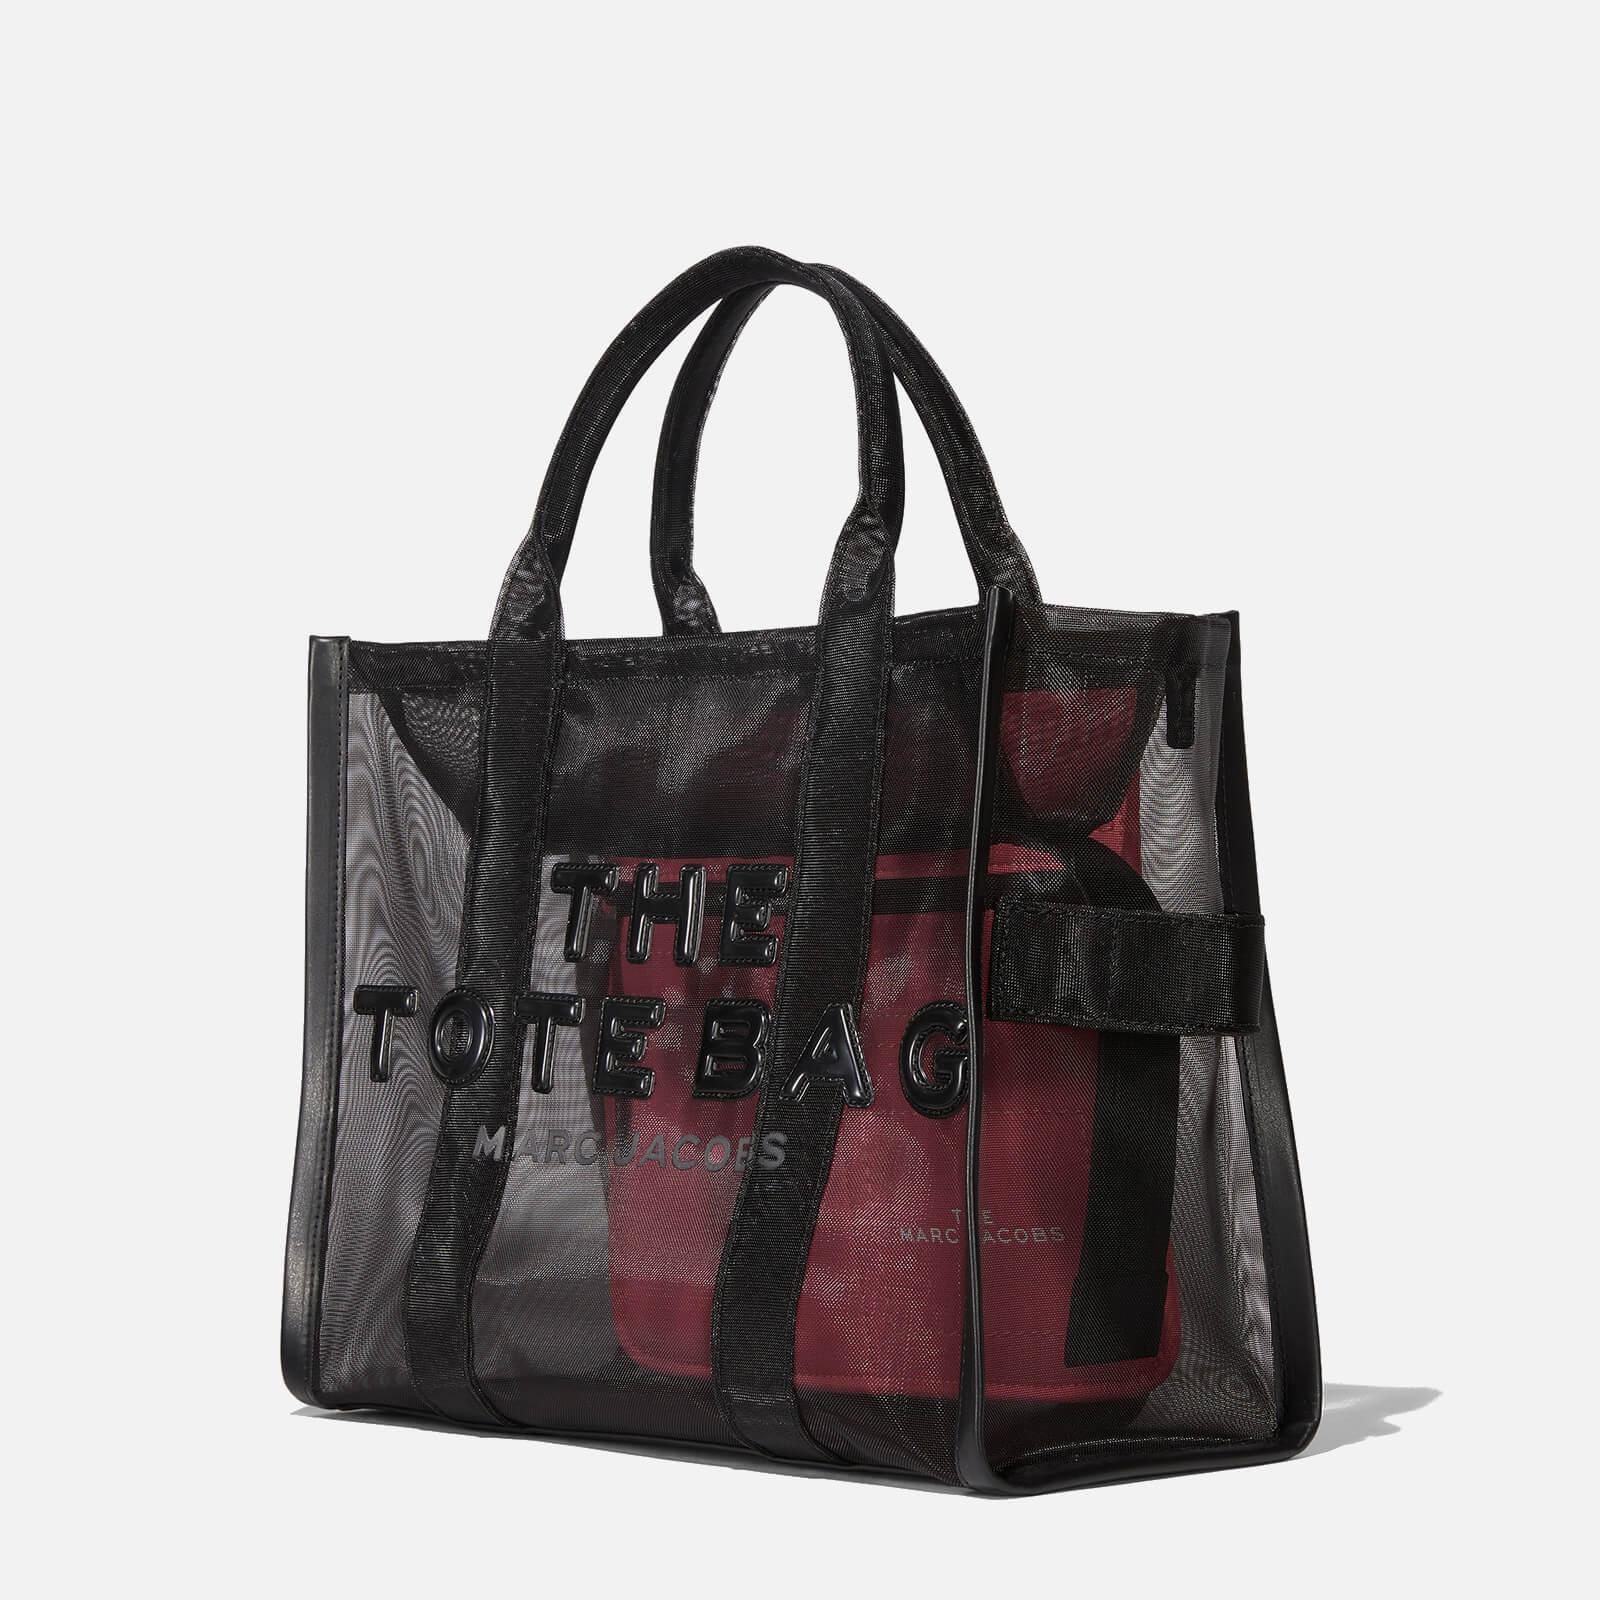 Marc Jacobs The Medium Mesh Tote Bag in Black